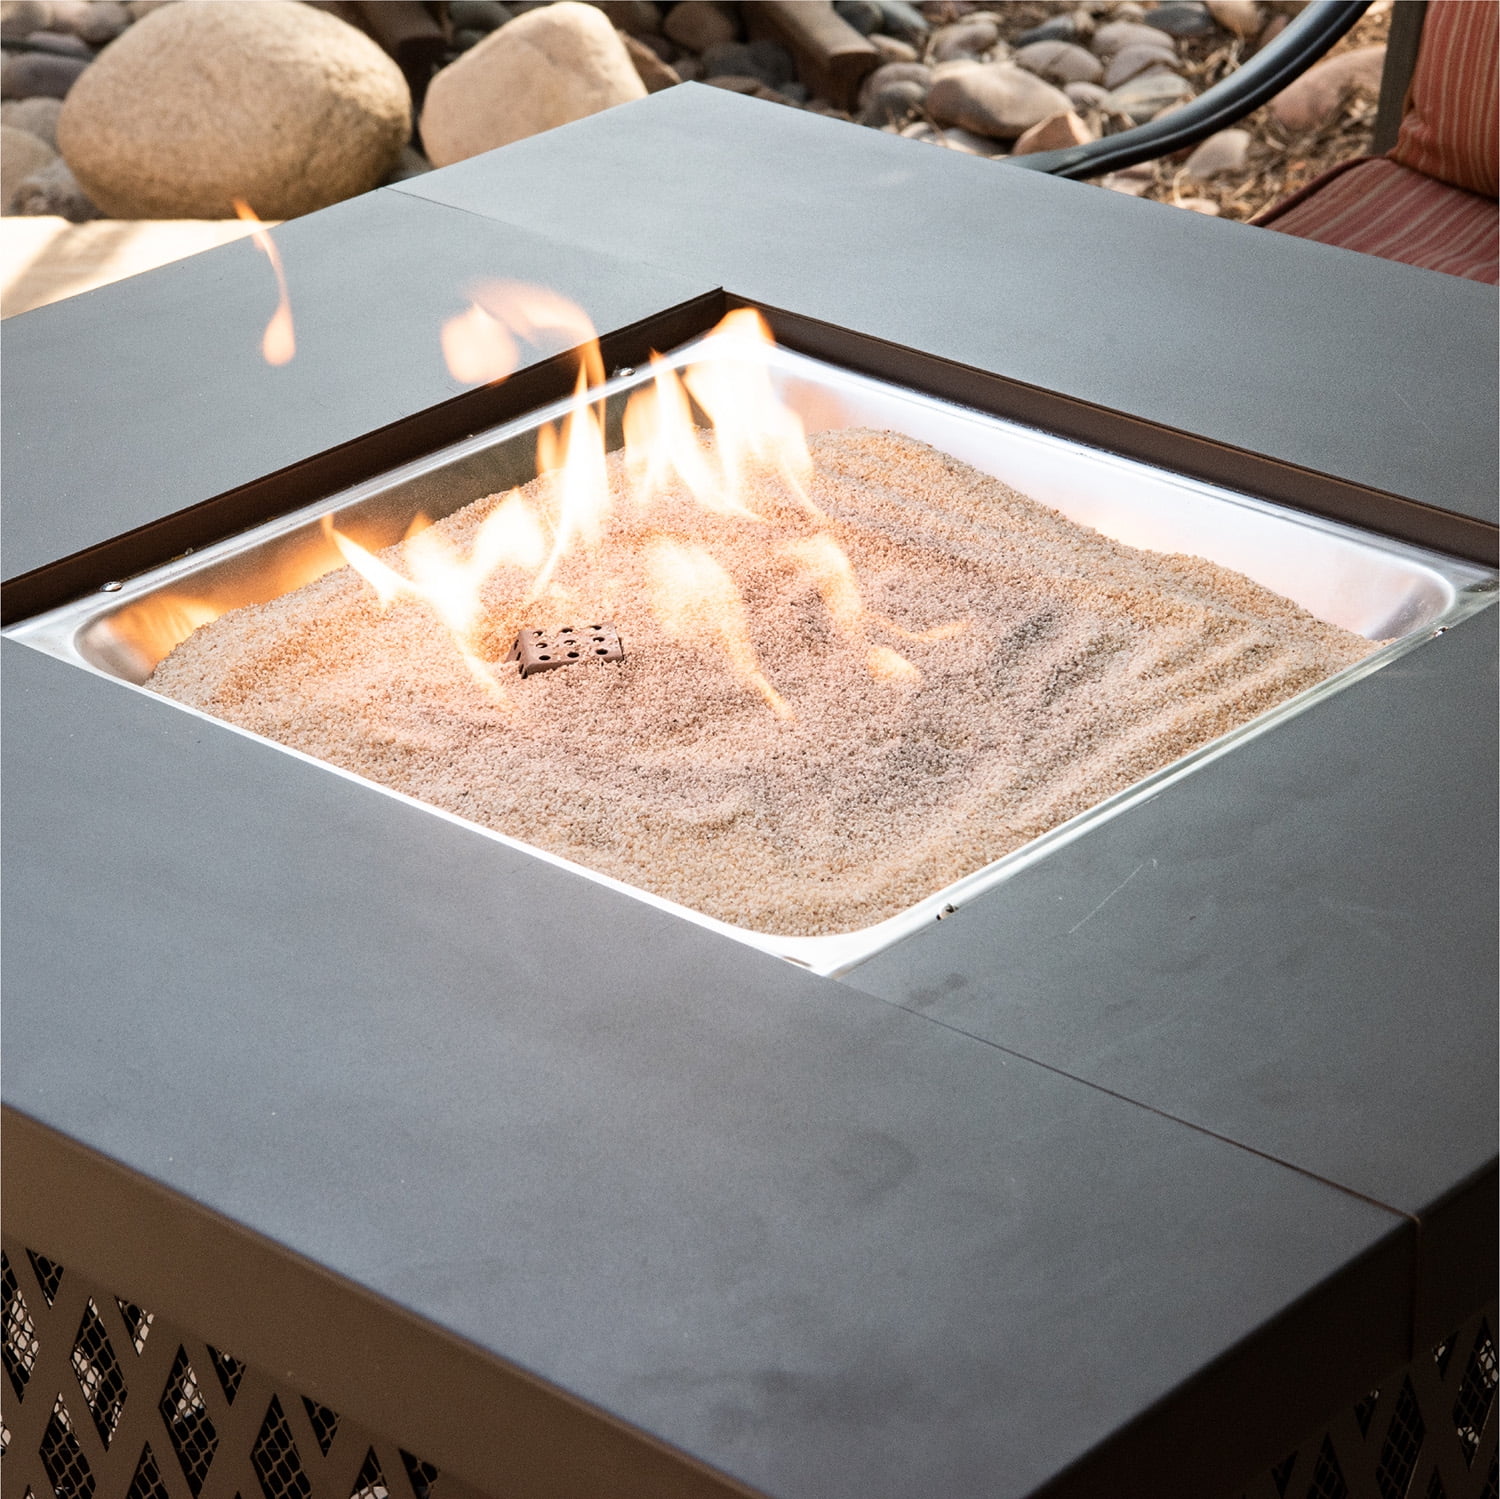 Silica Sand Heatproof Base Layer Sand For Fire Pits Amp Fireplaces 10 Lbs Walmart Com